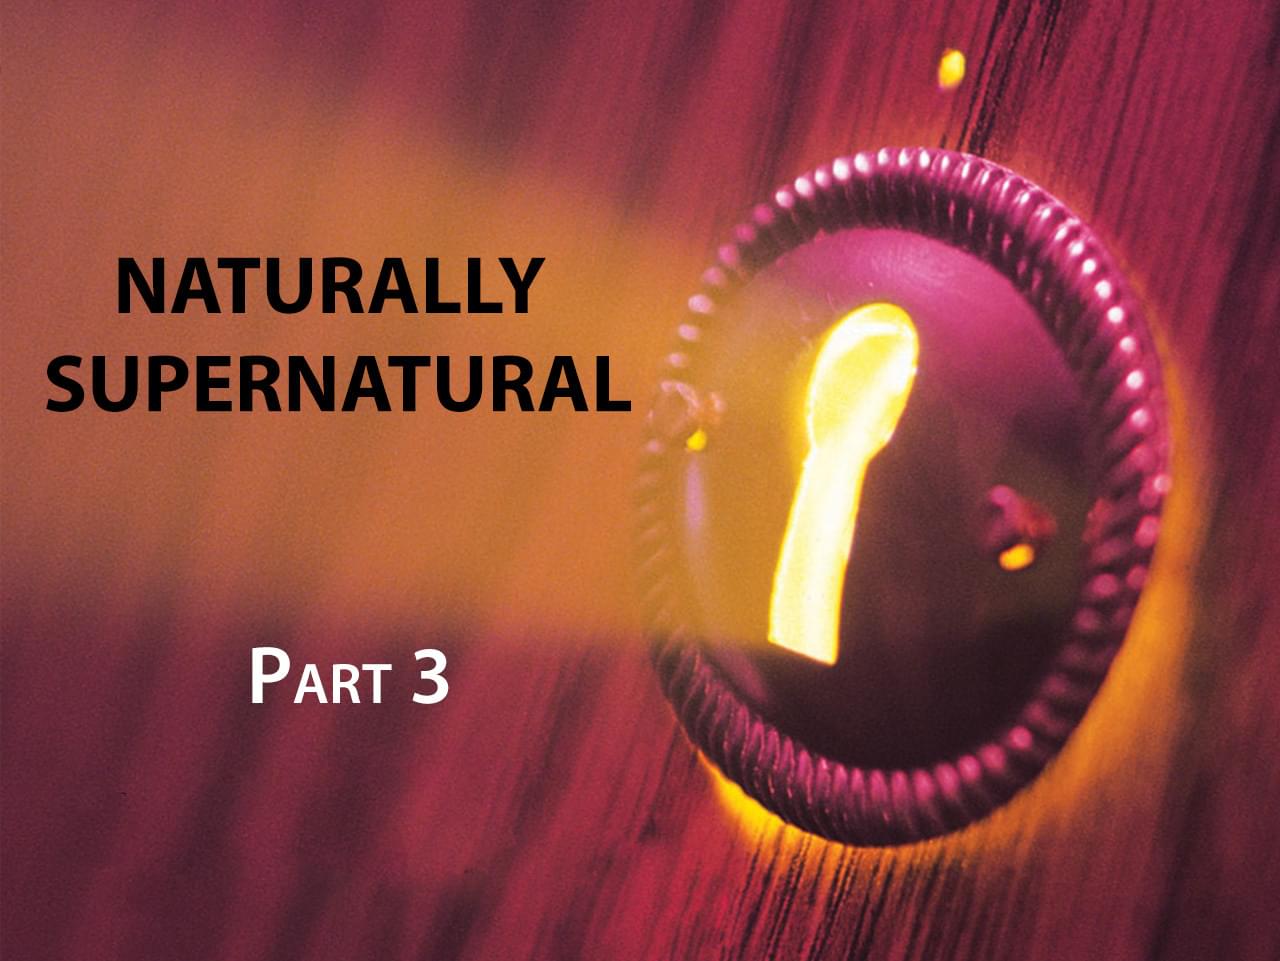 Naturally Supernatural Part 3